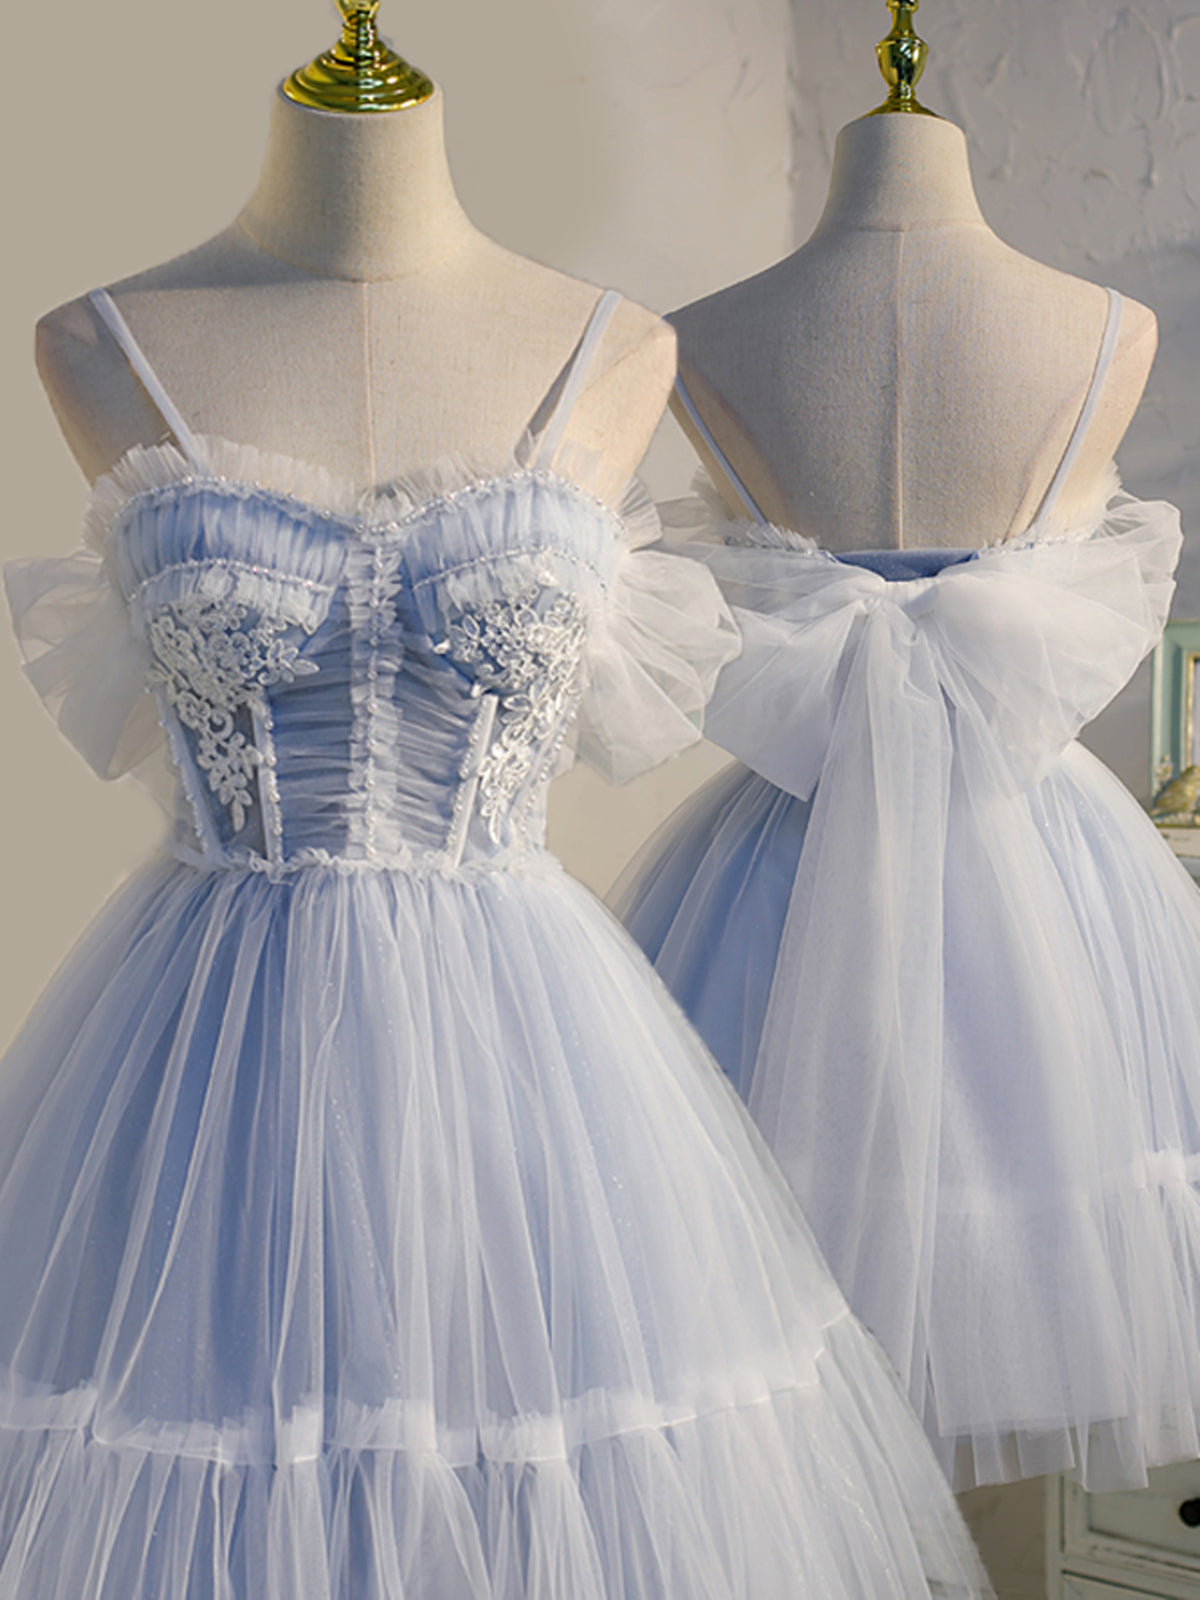 Party Dress Fall, Short Off the Shoulder Light Blue Prom Dresses, Light Blue Formal Homecoming Dresses